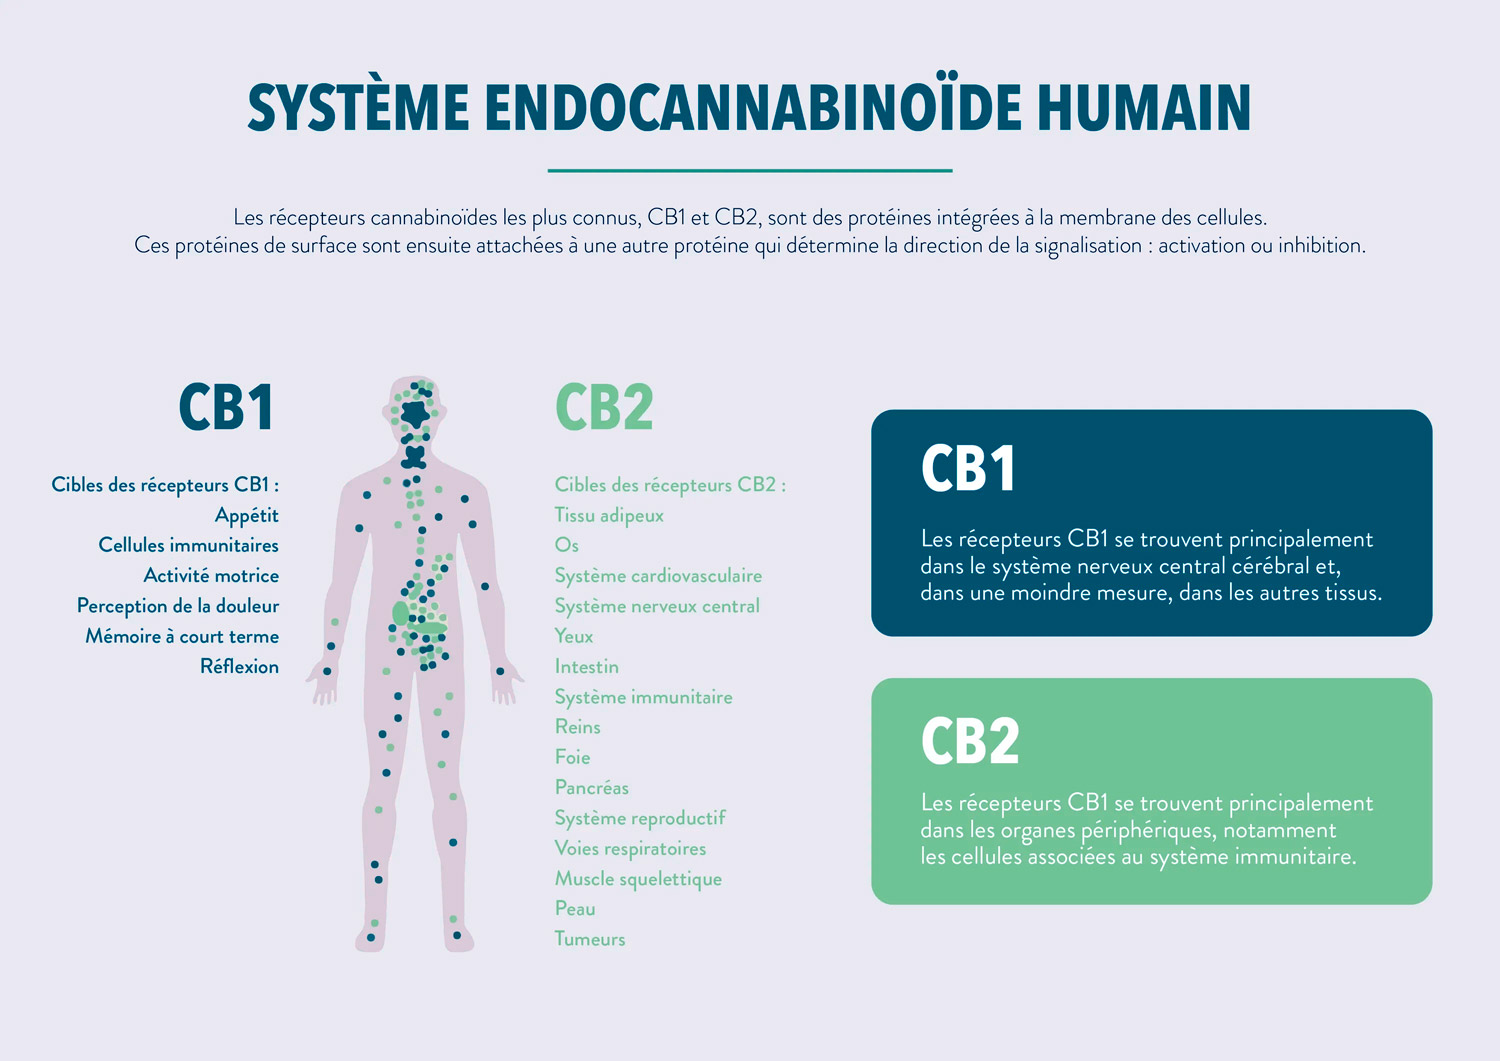 Le système endocannabinoïde humain